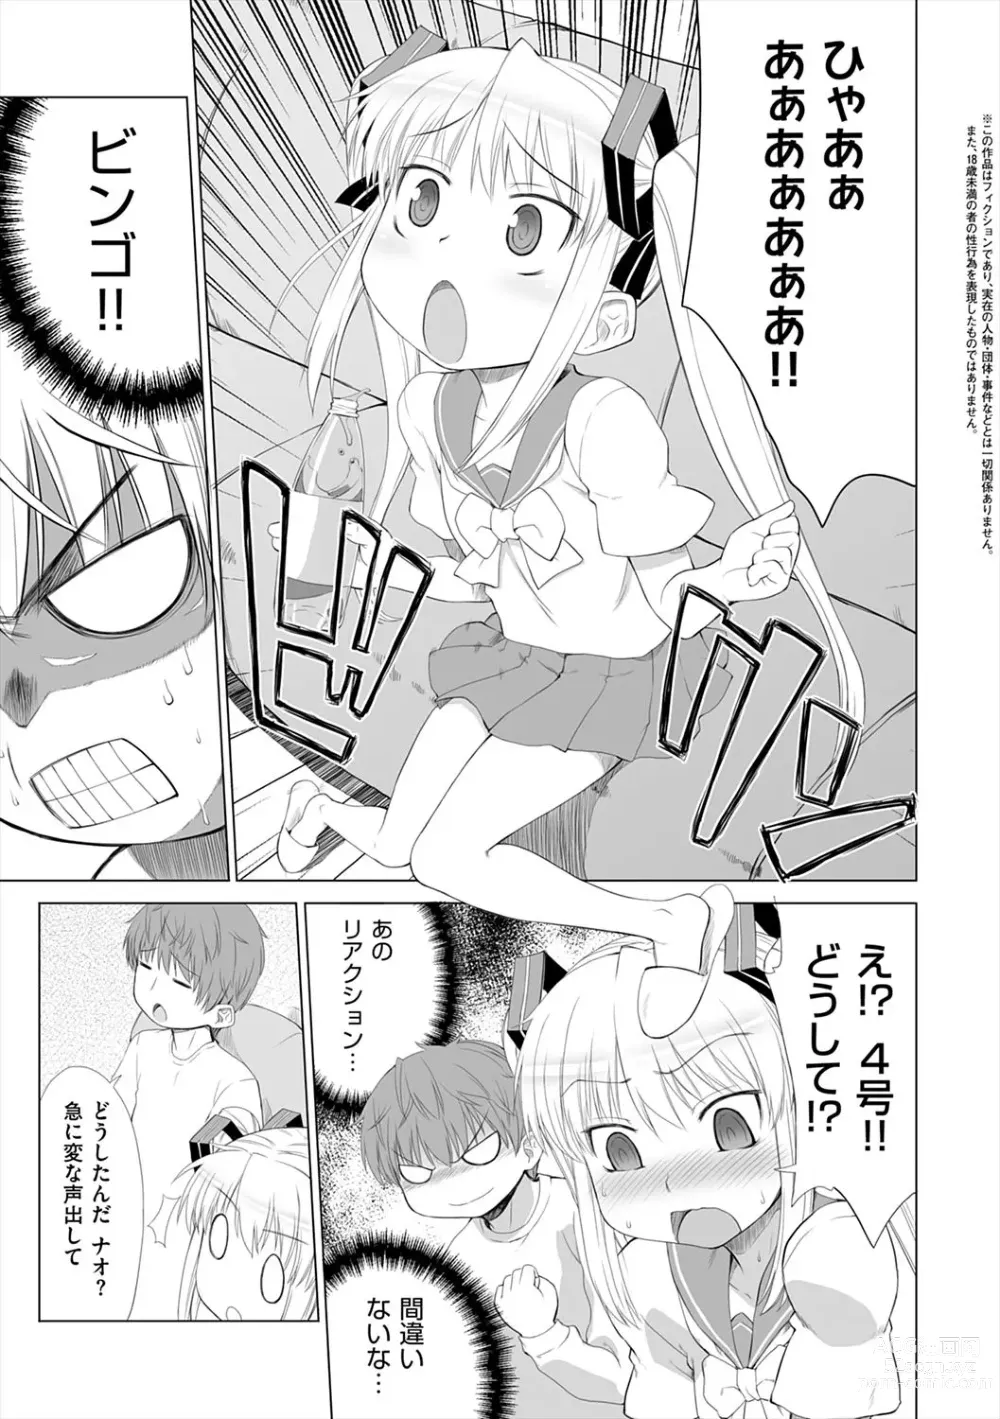 Page 185 of manga Marble Girls